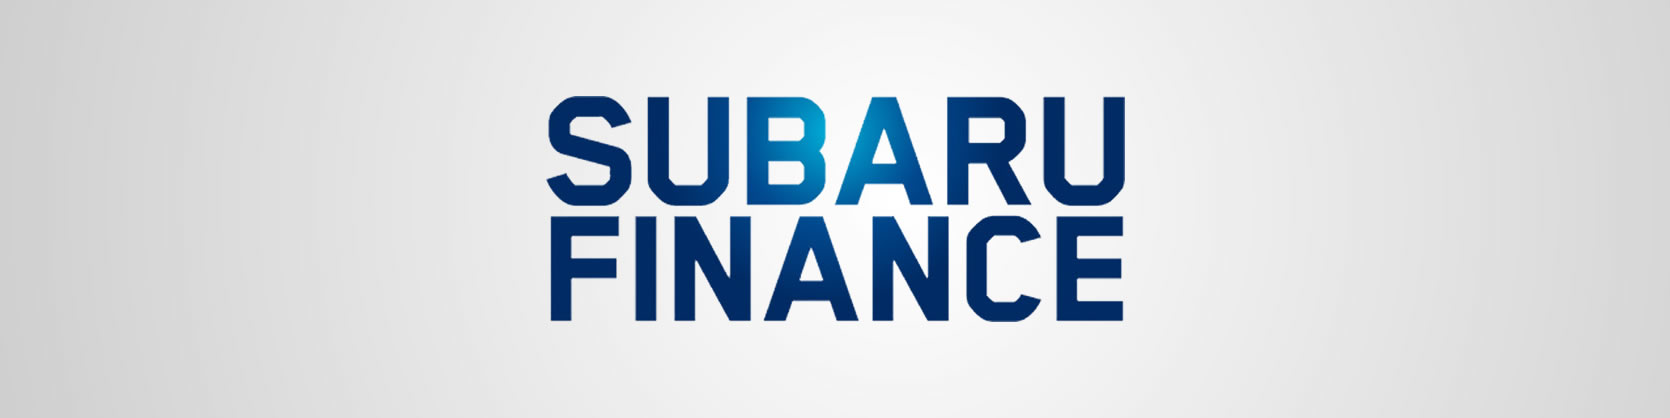 car finance, More Details Released on the 2016 Subaru Levorg